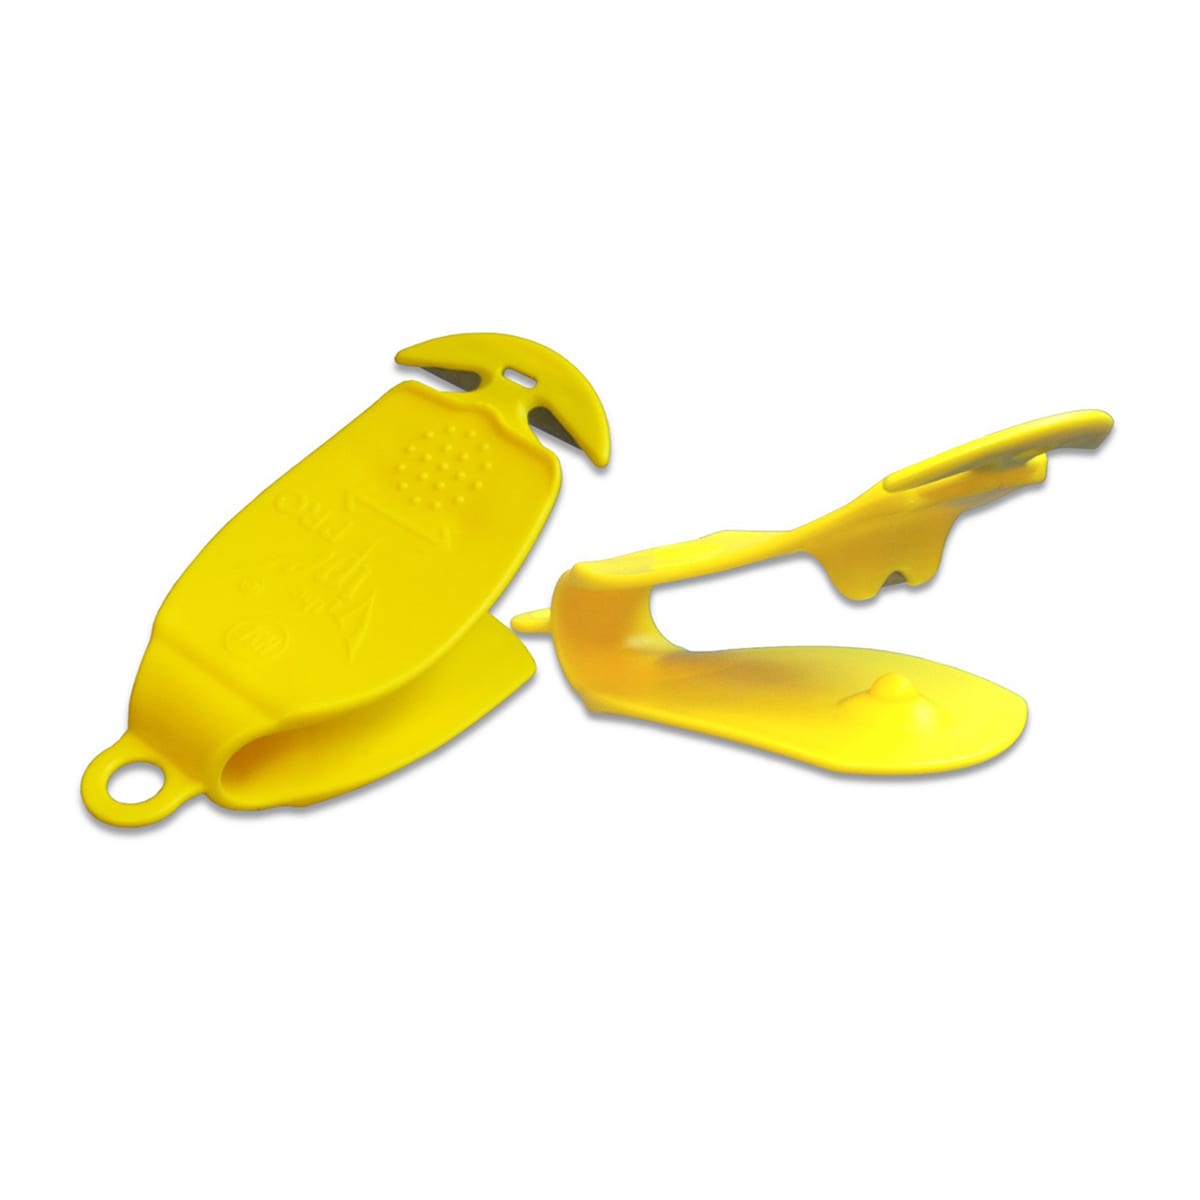 CrewSafe Viper Pro Yellow Safety Bag Opener / Cutter VP-PR1 - 6/Pack